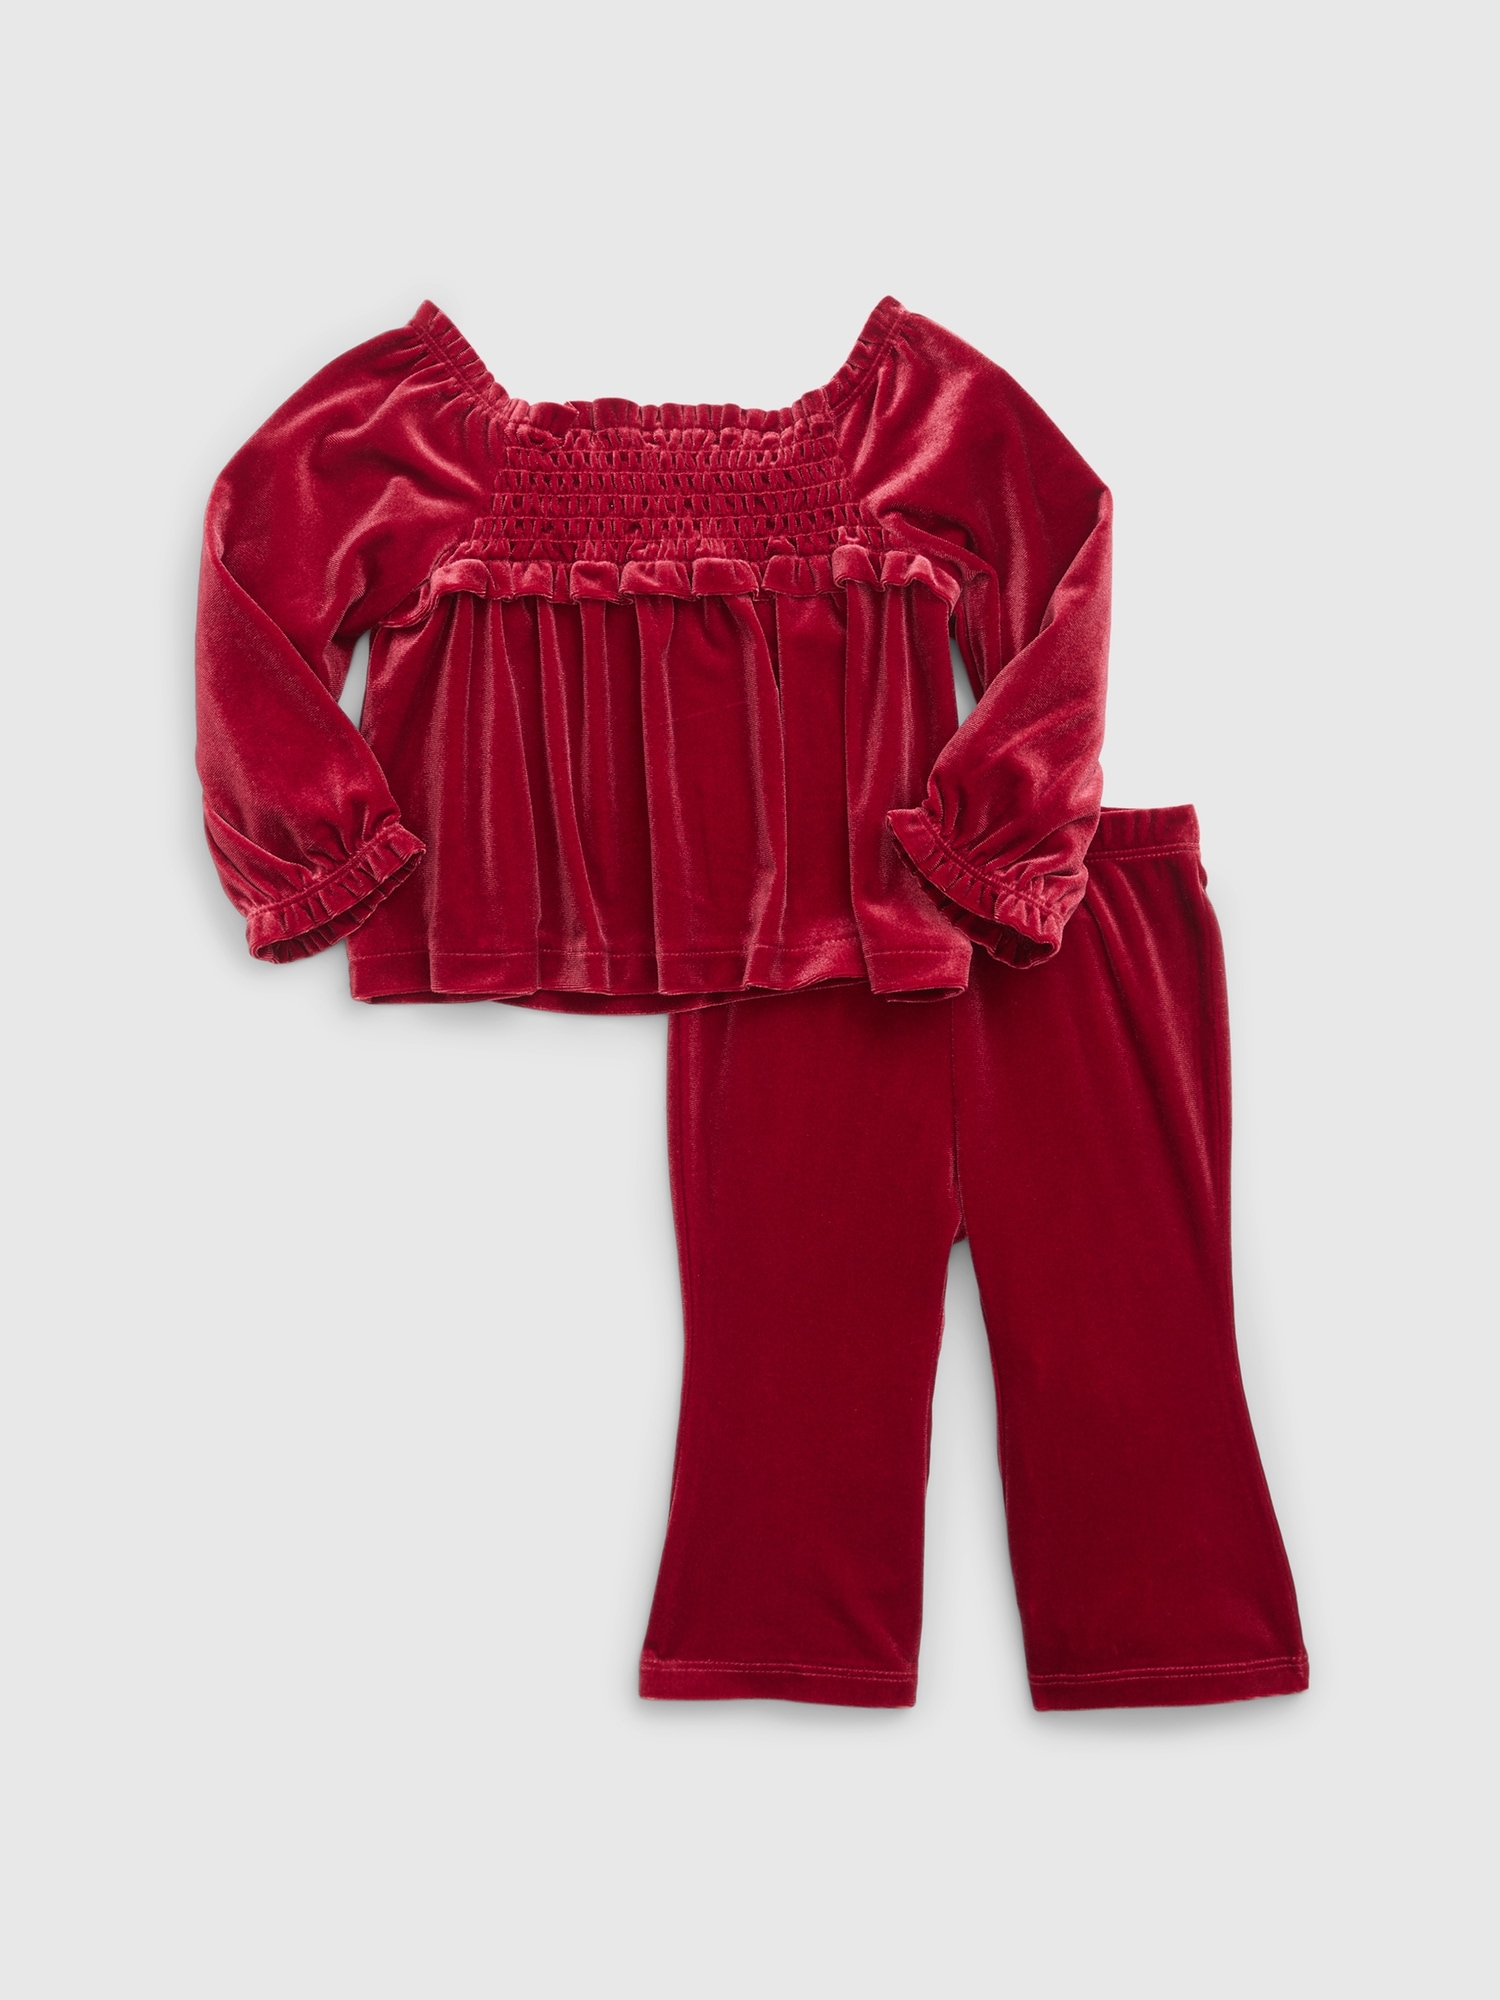 Baby Velvet Smocked Outfit Set